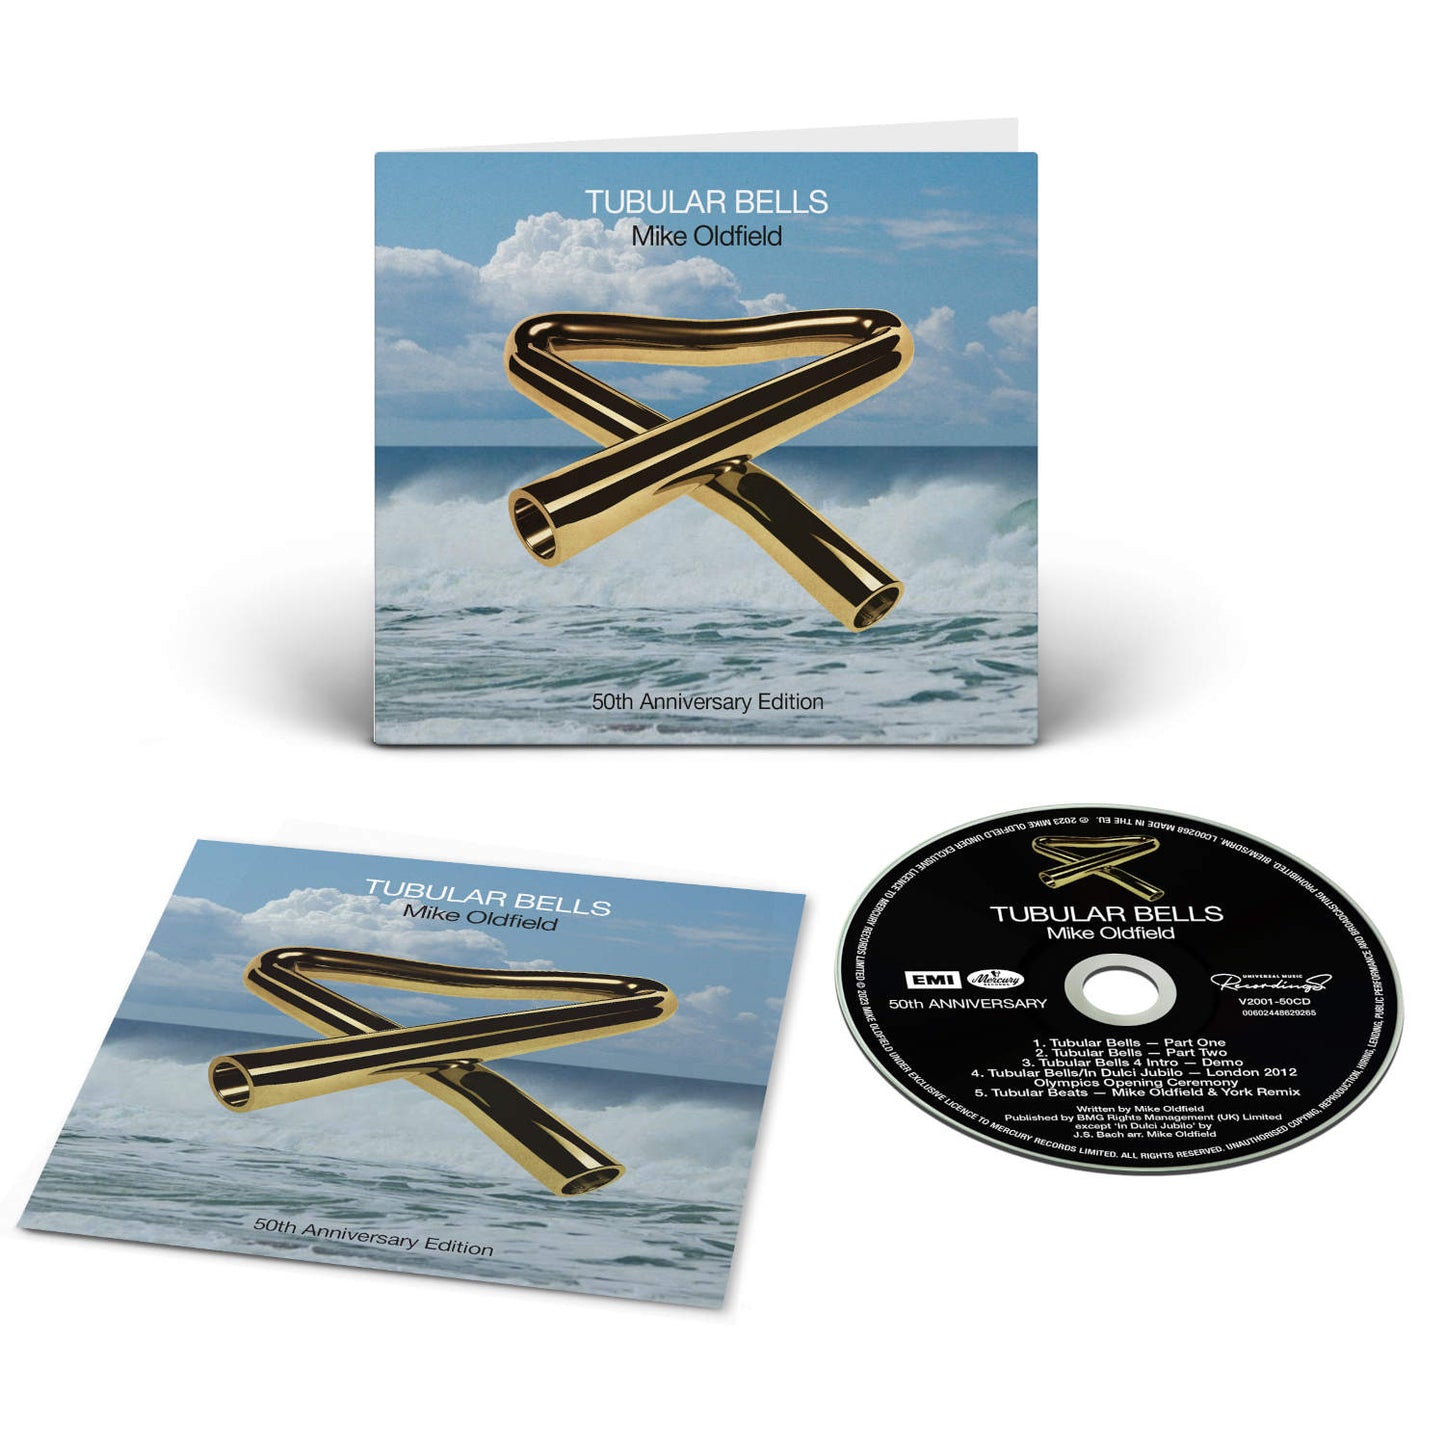 BUNDLE: Mike Oldfield / Tubular Bells 50th anniversary bundle: blu-ray audio + CD